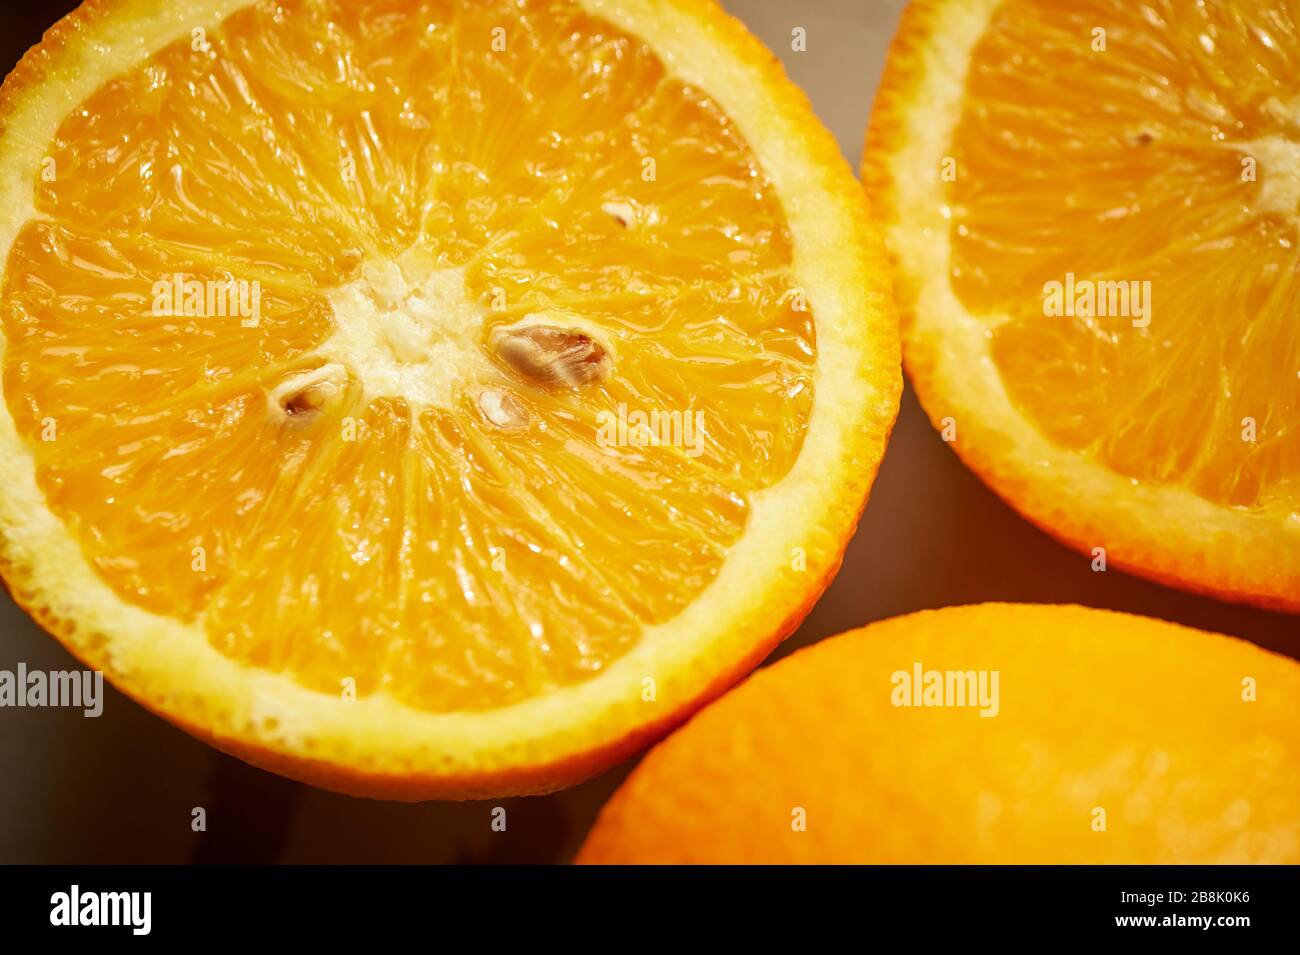 Close-up, cut orange with seeds.Juicy raw food. Stock Photo